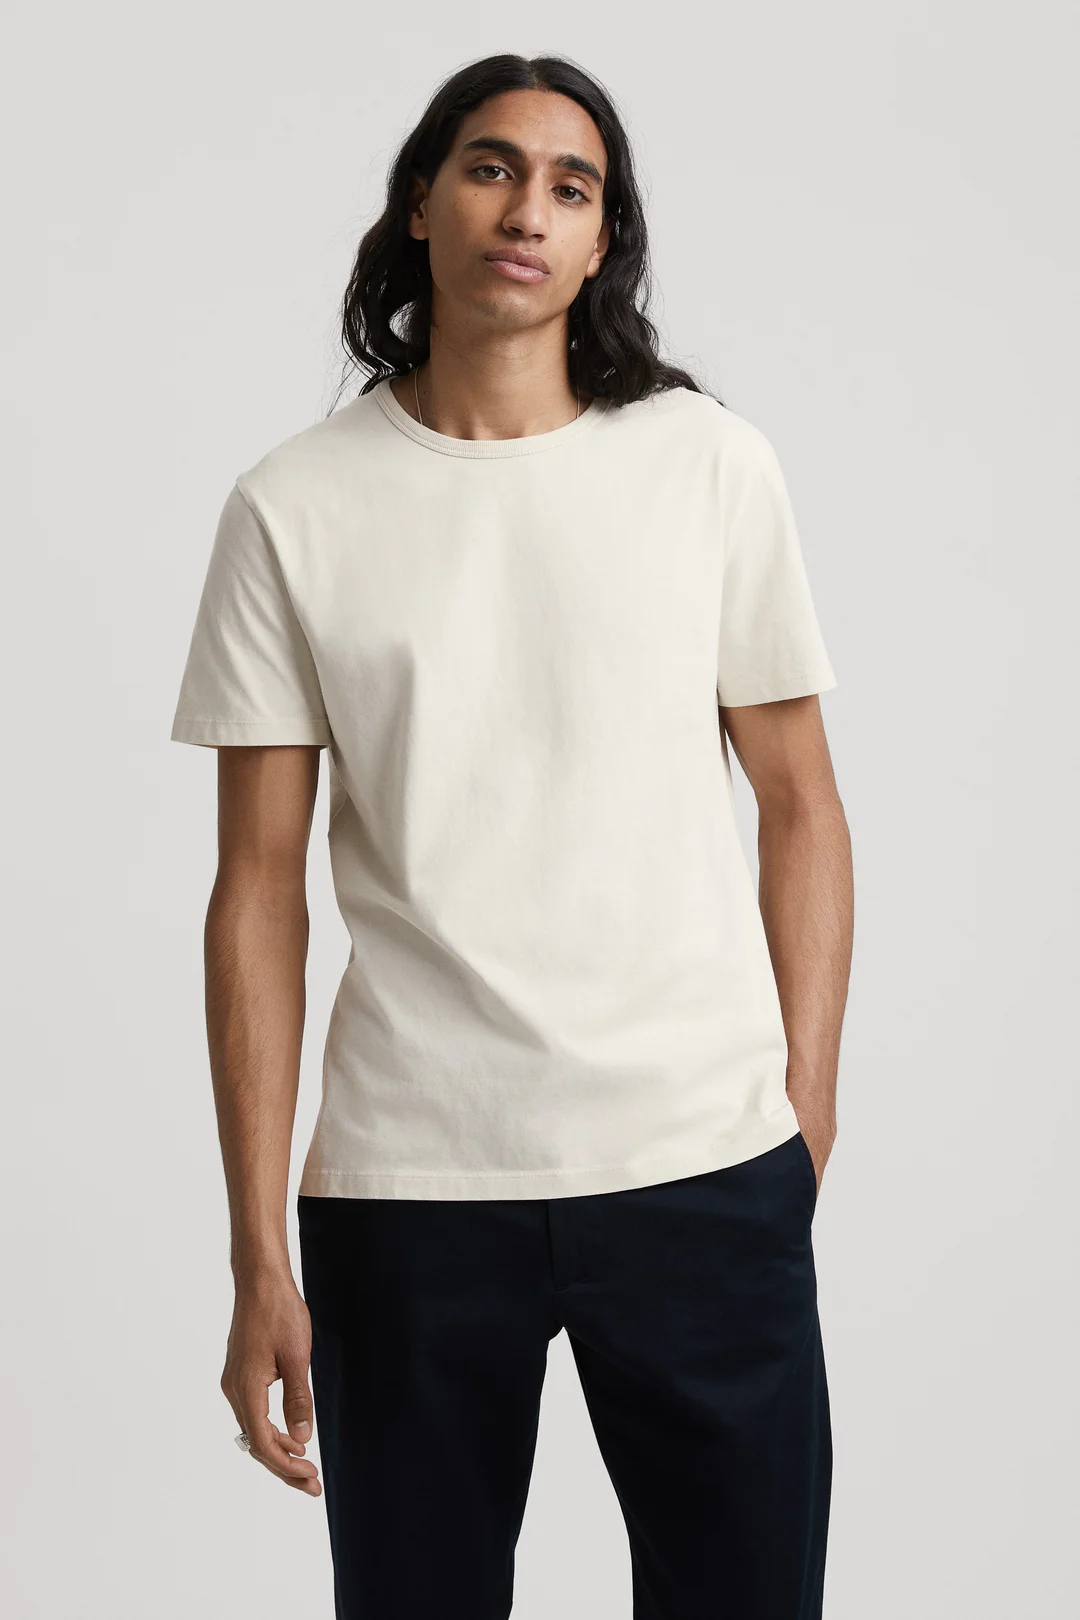 Off White T-Shirt | Premium Heavyweight Cotton Crewneck - ASKET